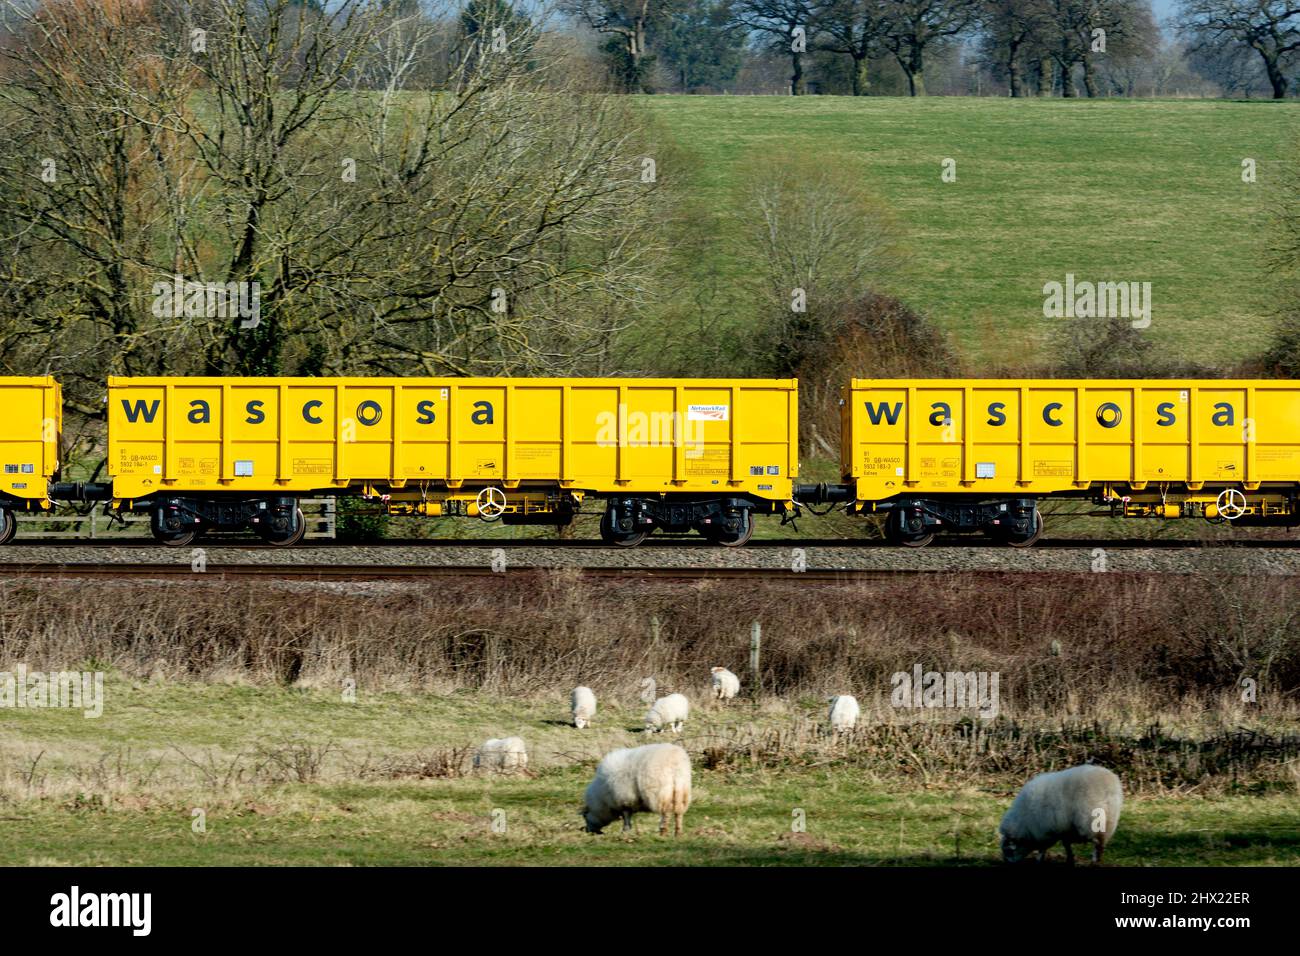 Wascosa wagons on a Network Rail ballast train, Warwickshire, UK Stock Photo